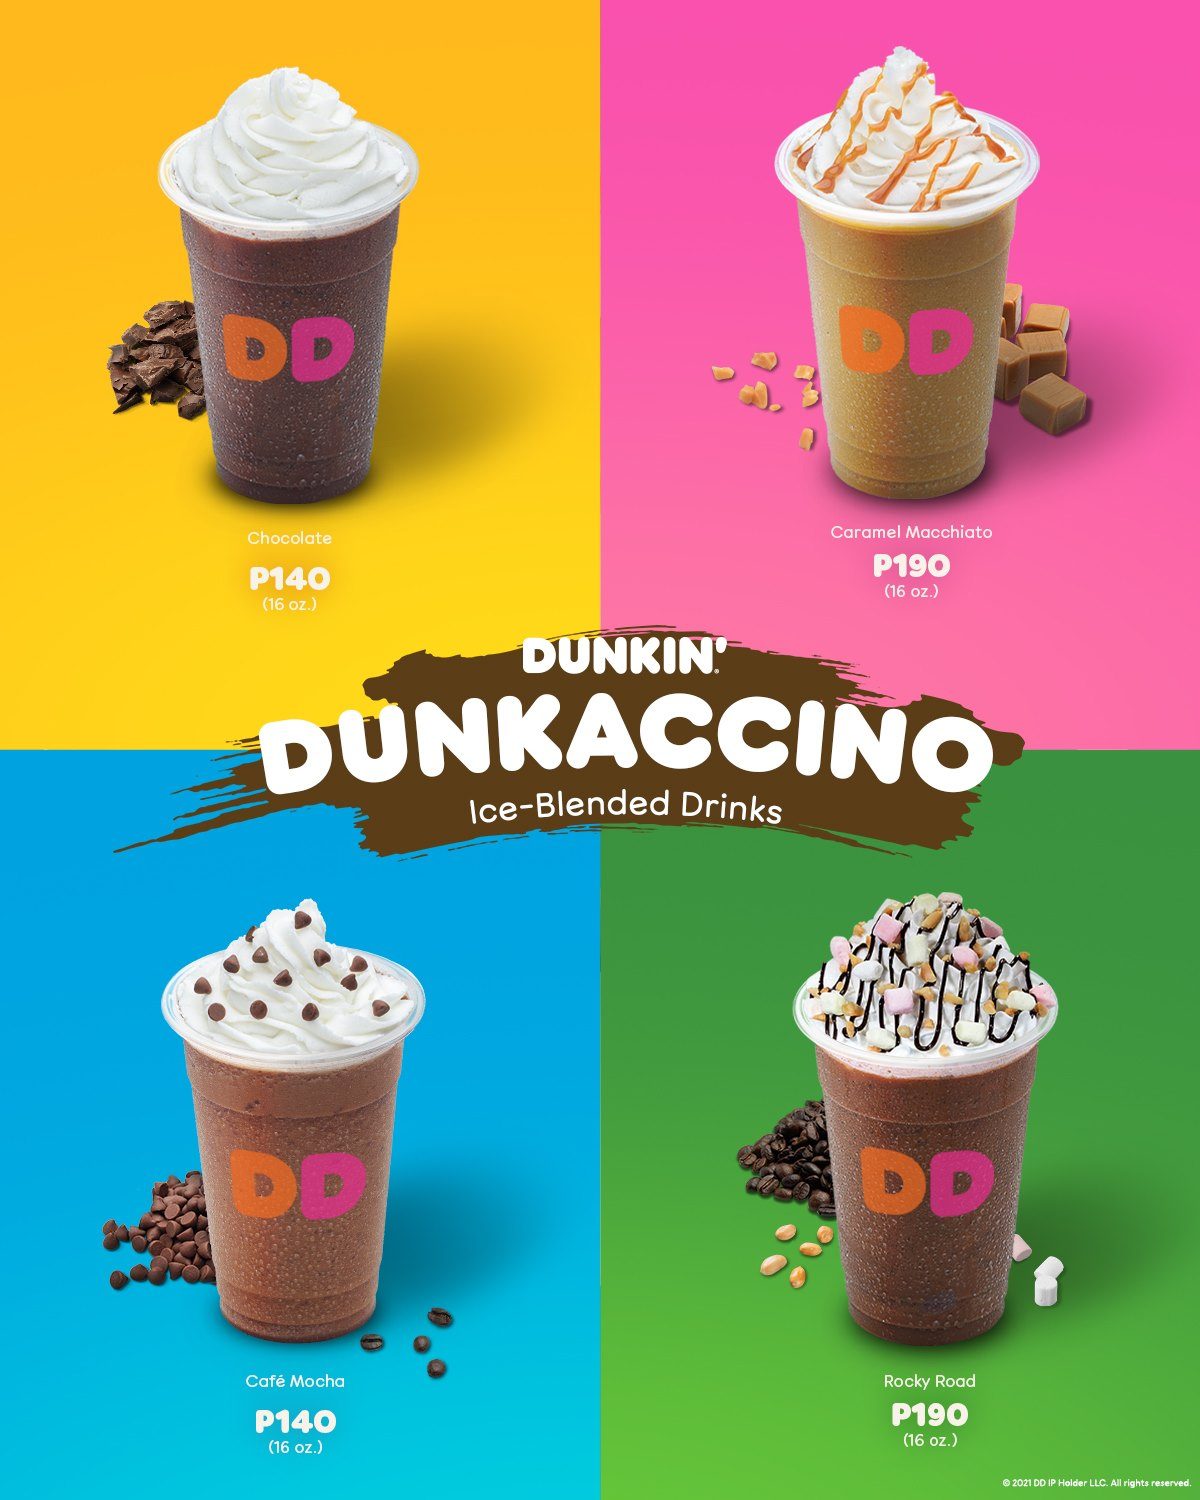 Dunkin’ offers new ‘dunkaccino’ drinks